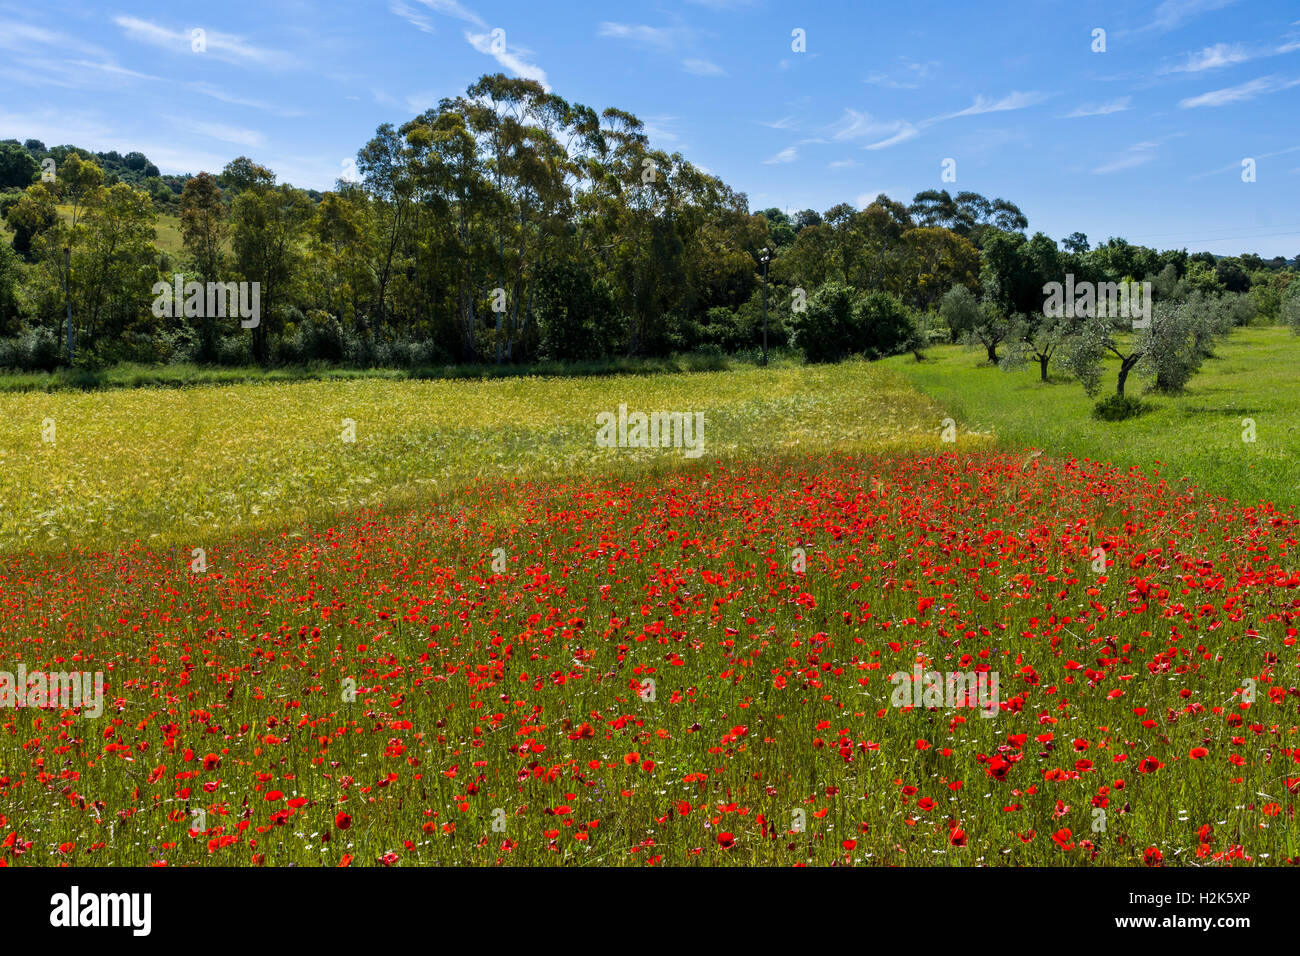 Typische grüne toskanische Landschaft mit Hügeln, Bäume, rote Mohnblumen und blau, bewölkten Himmel, Massa Marittima, Toskana, Italien Stockfoto